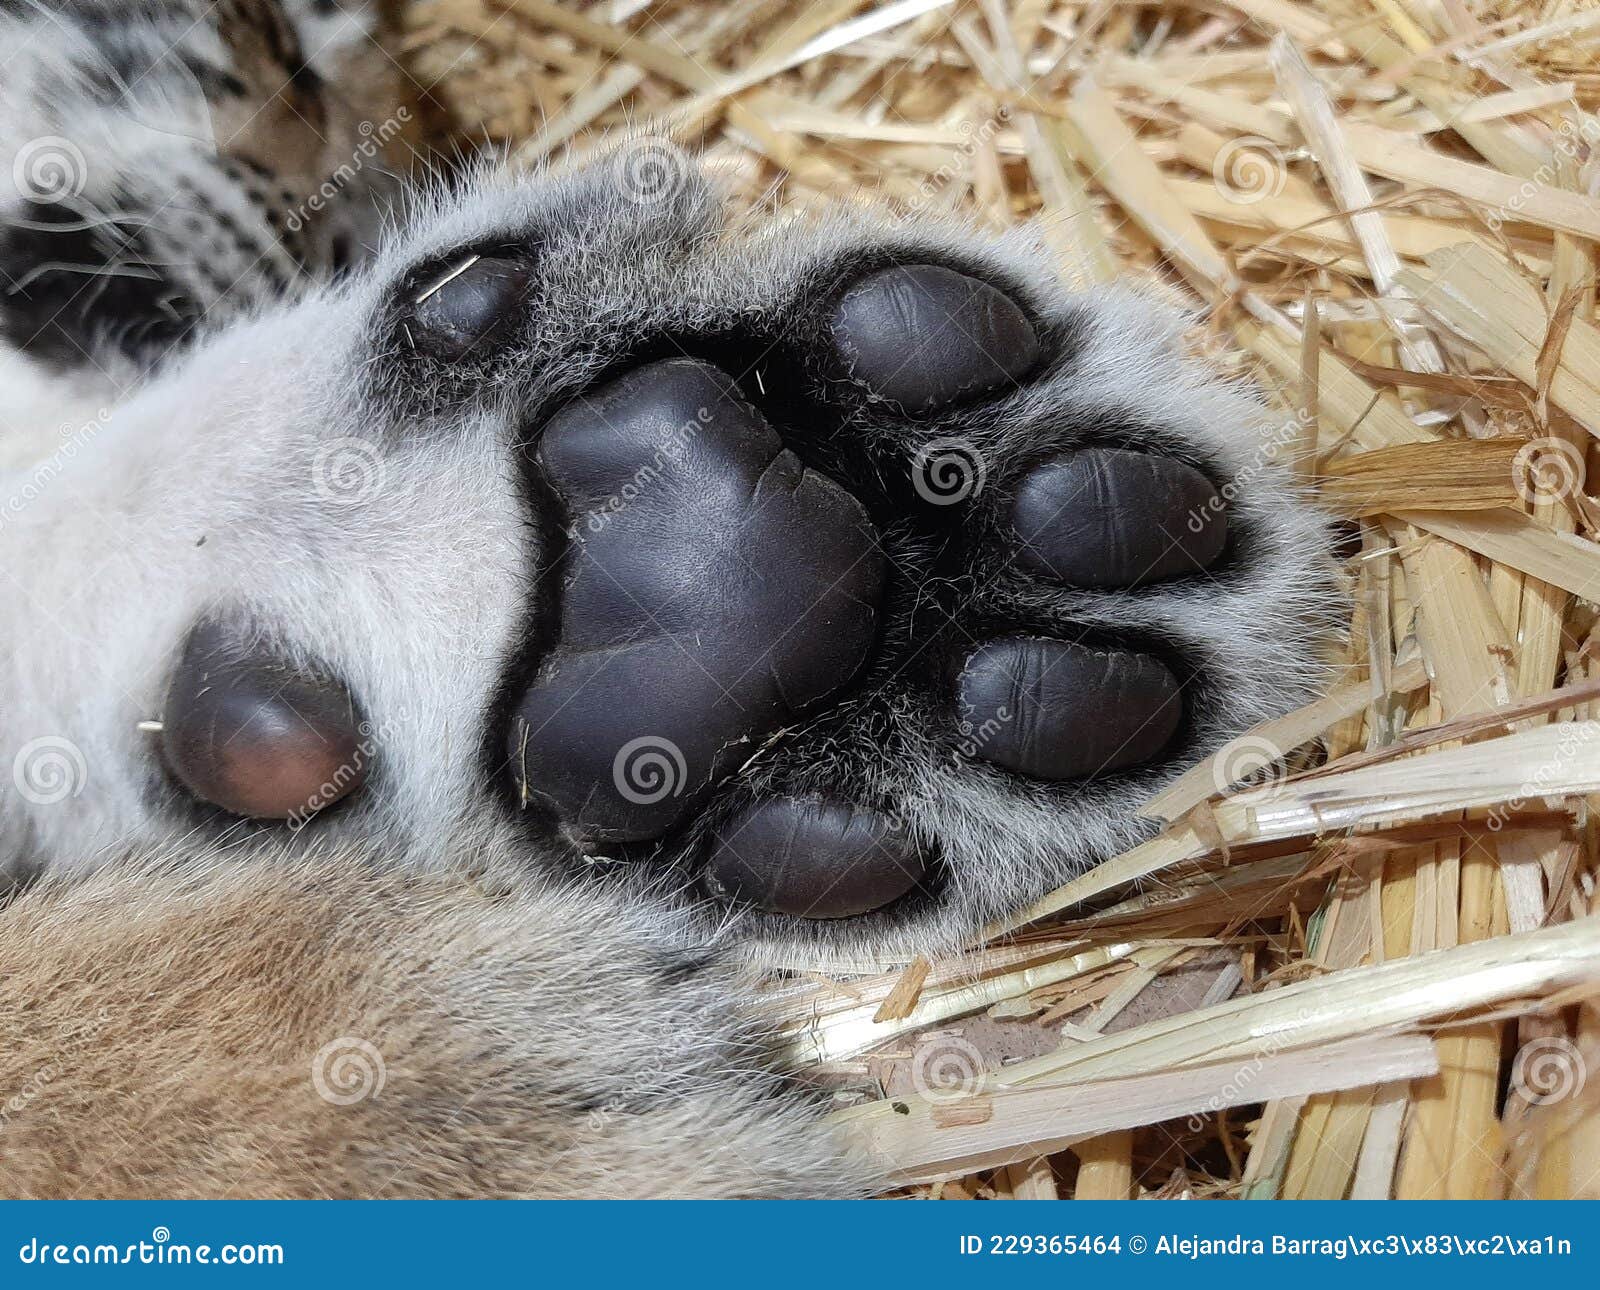 cub lioness paw